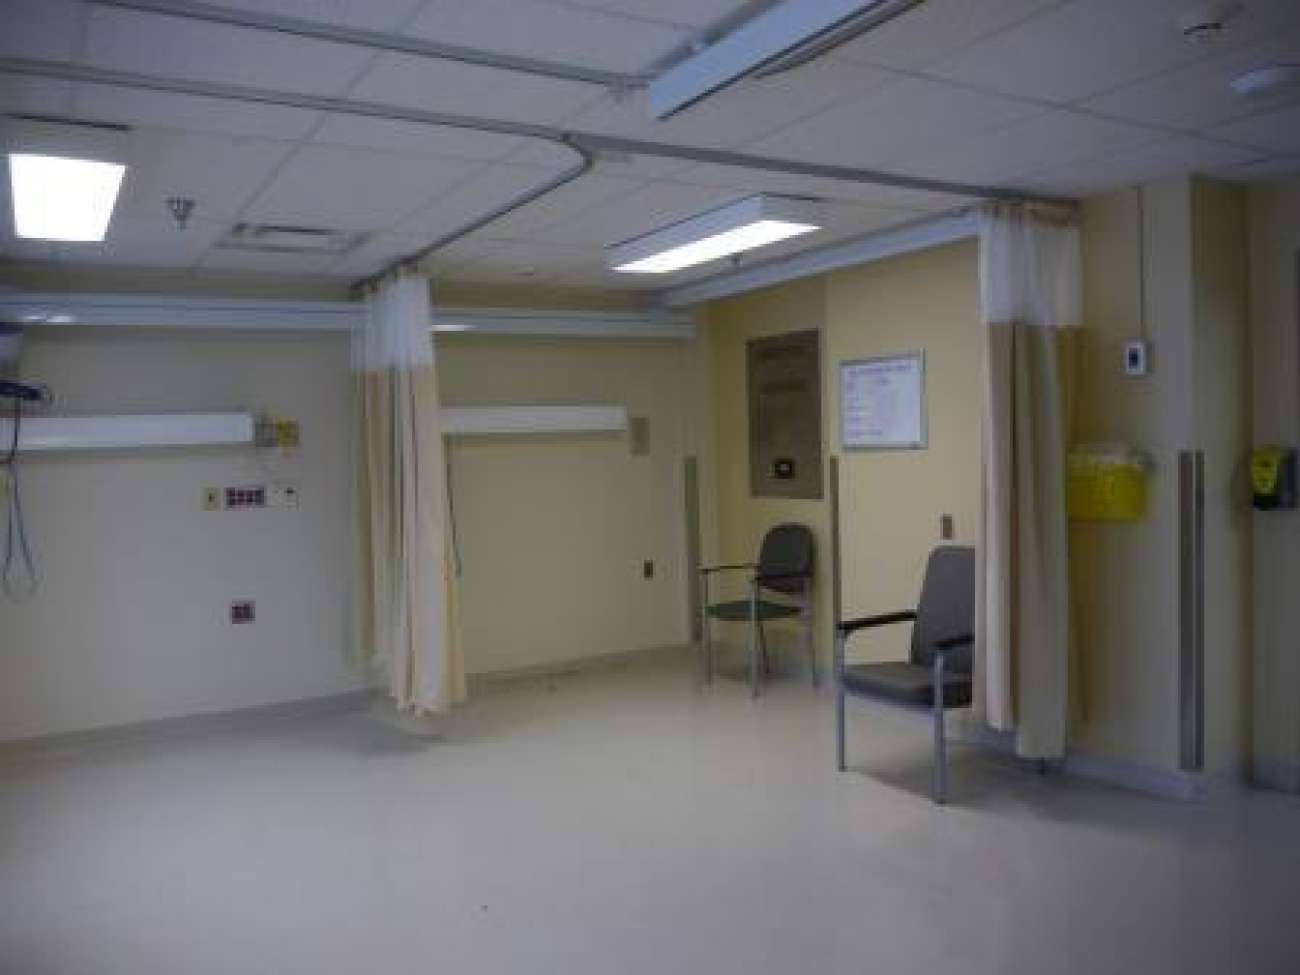 Patient care room